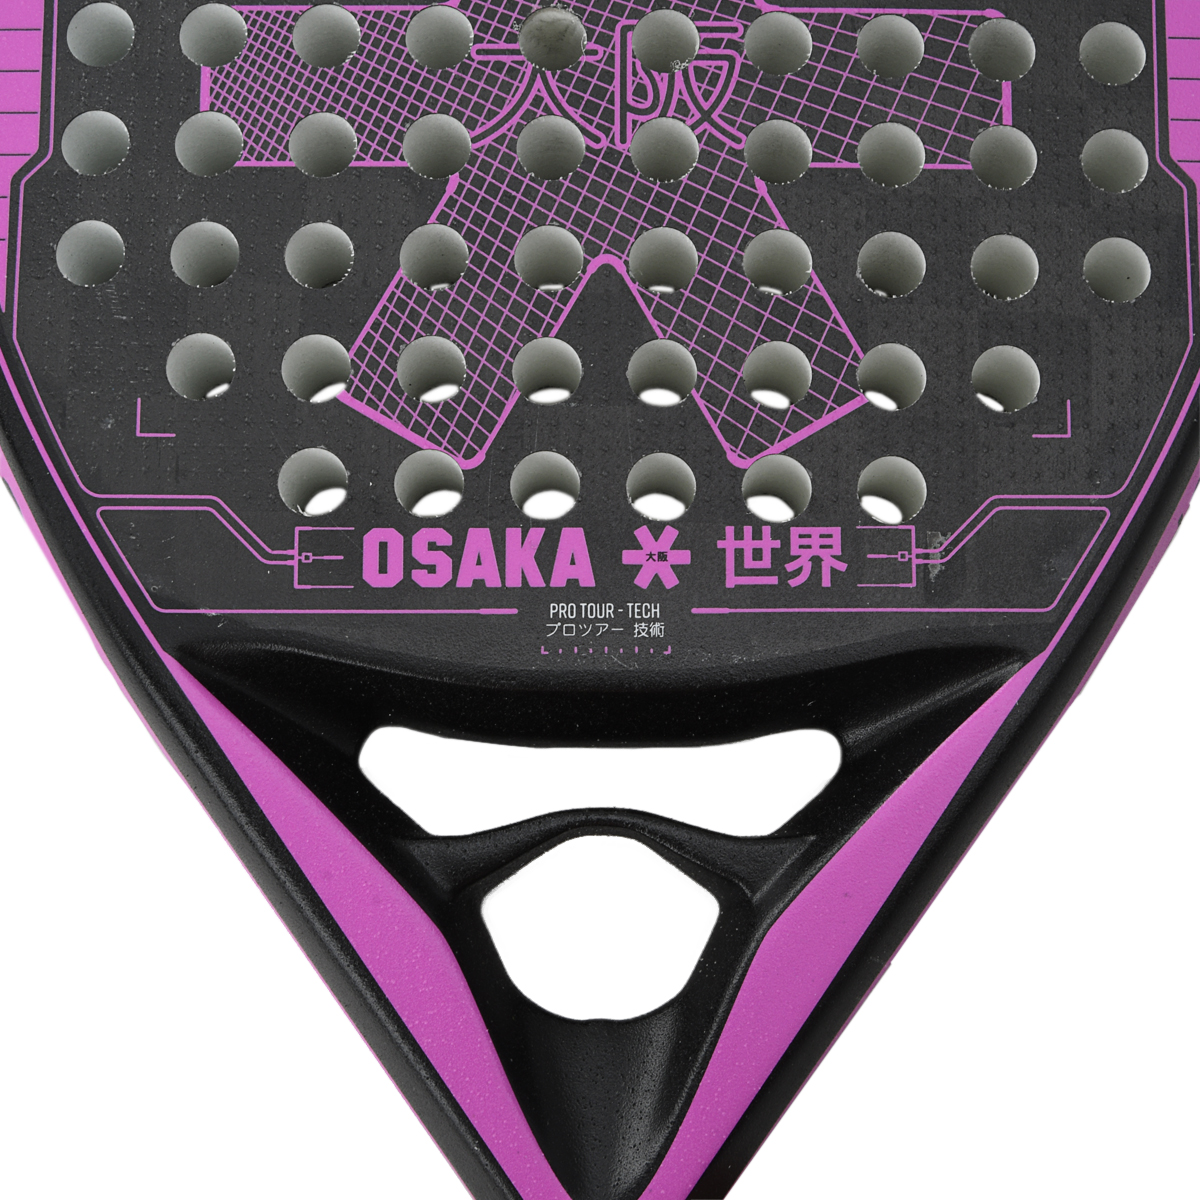 Paleta Osaka Pro Tour Tech,  image number null